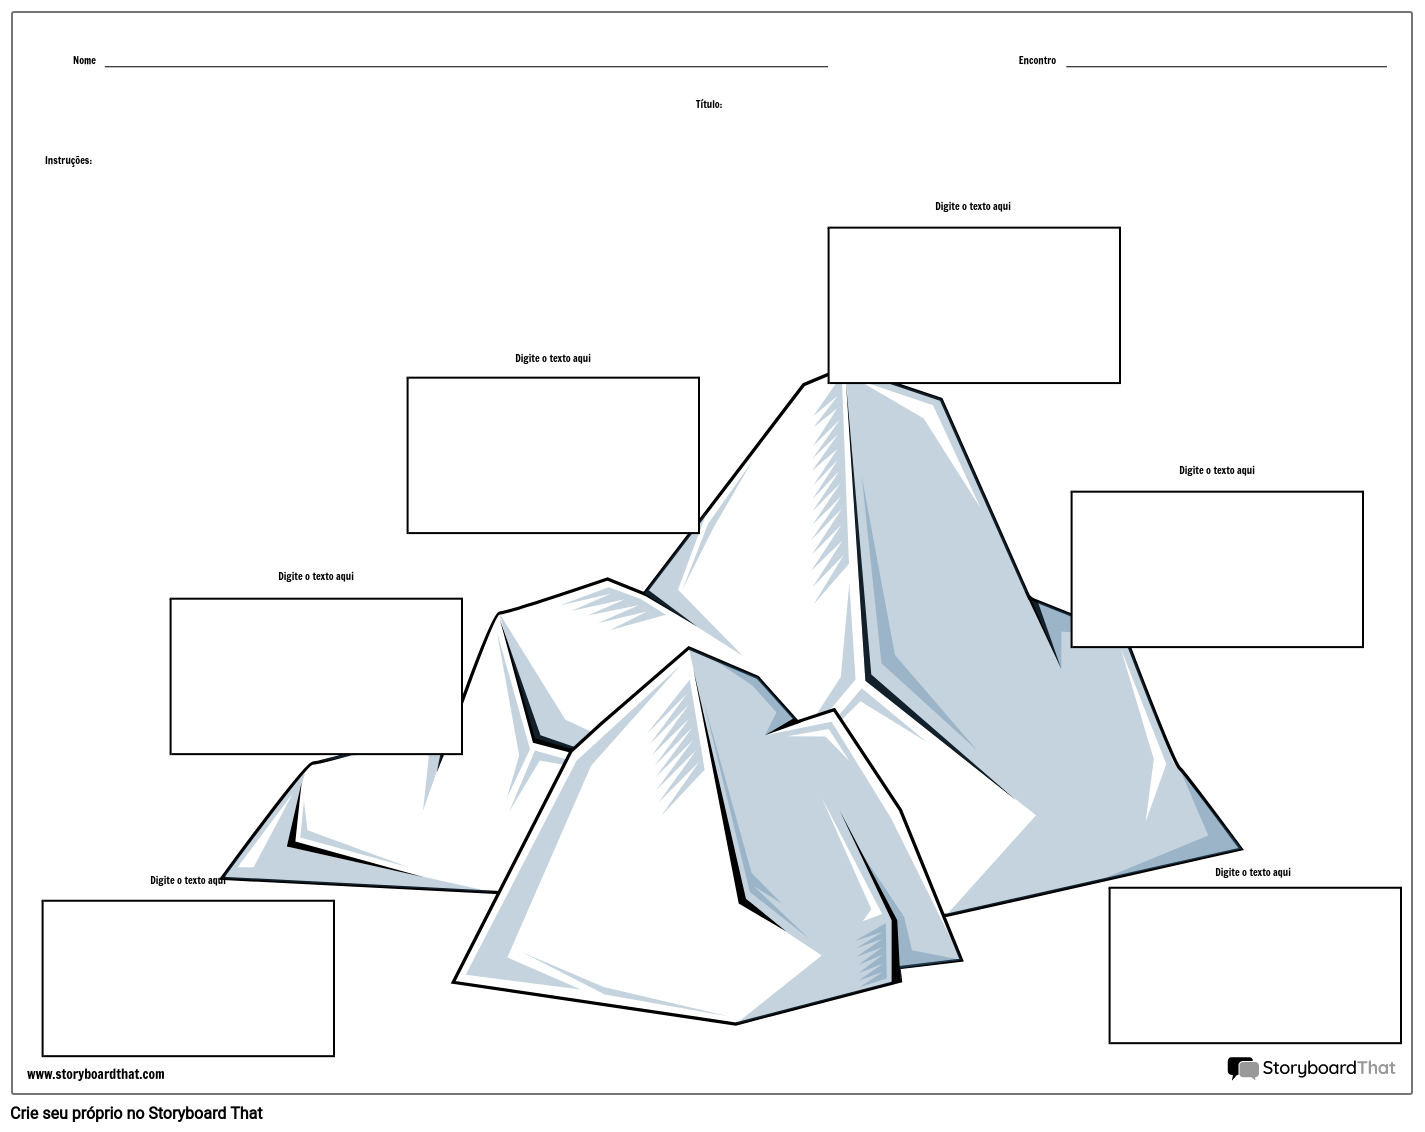 Traçar o Diagrama de Iceberg